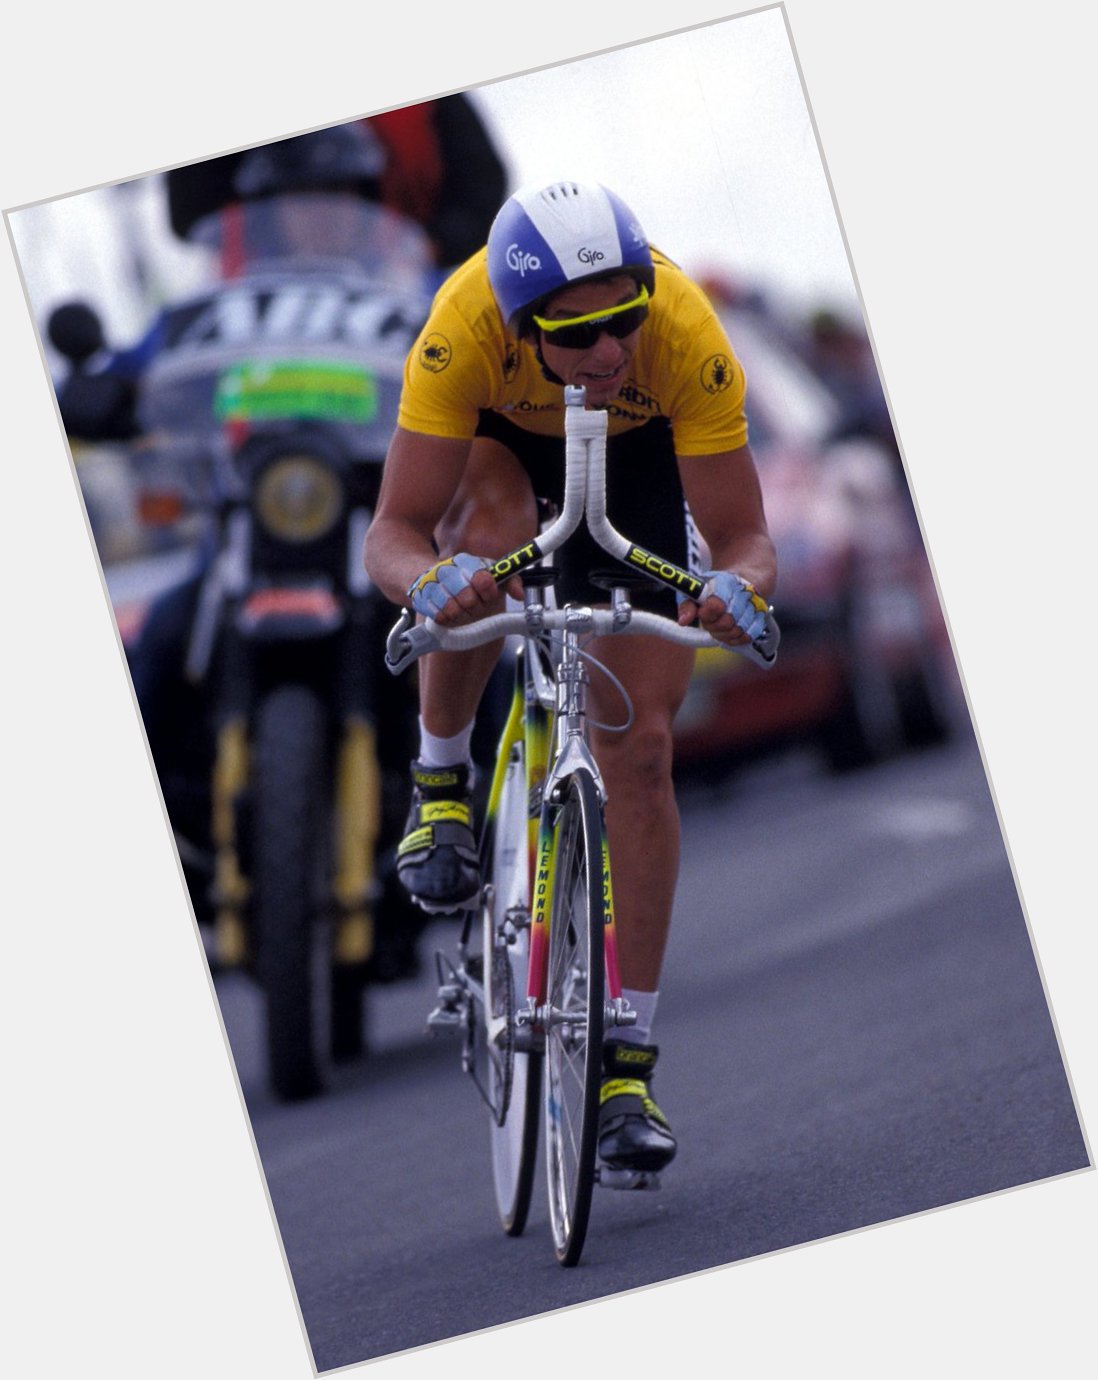 Happy 59th birthday, Greg Lemond! 30 years ago he won his last Tour de France. 